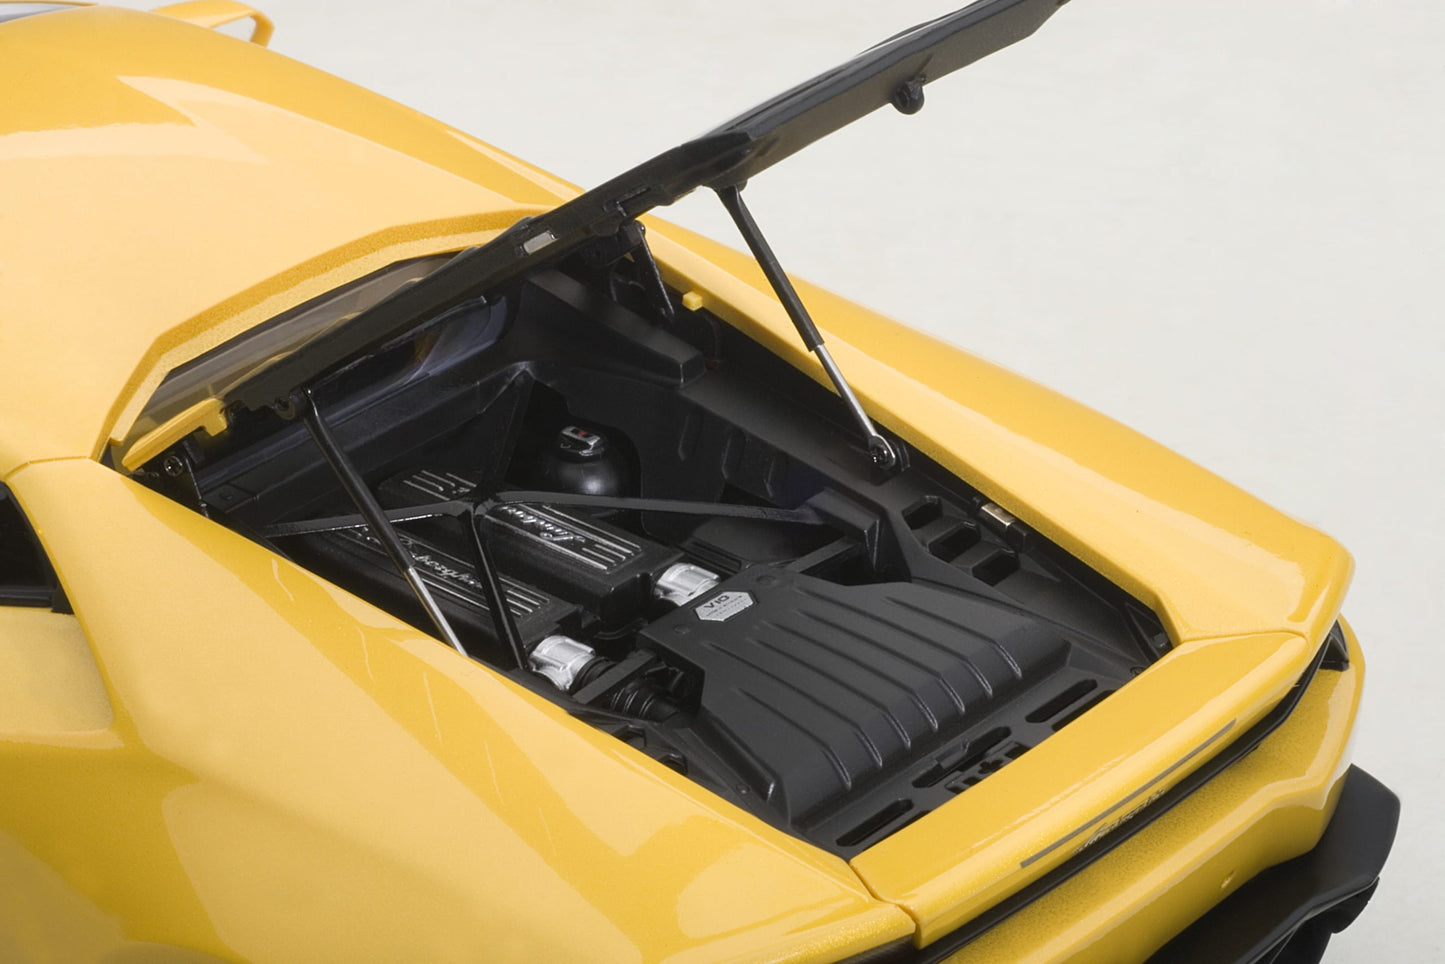 AUTOart 1:18 Lamborghini Huracan LP610-4 (Yellow) 74604